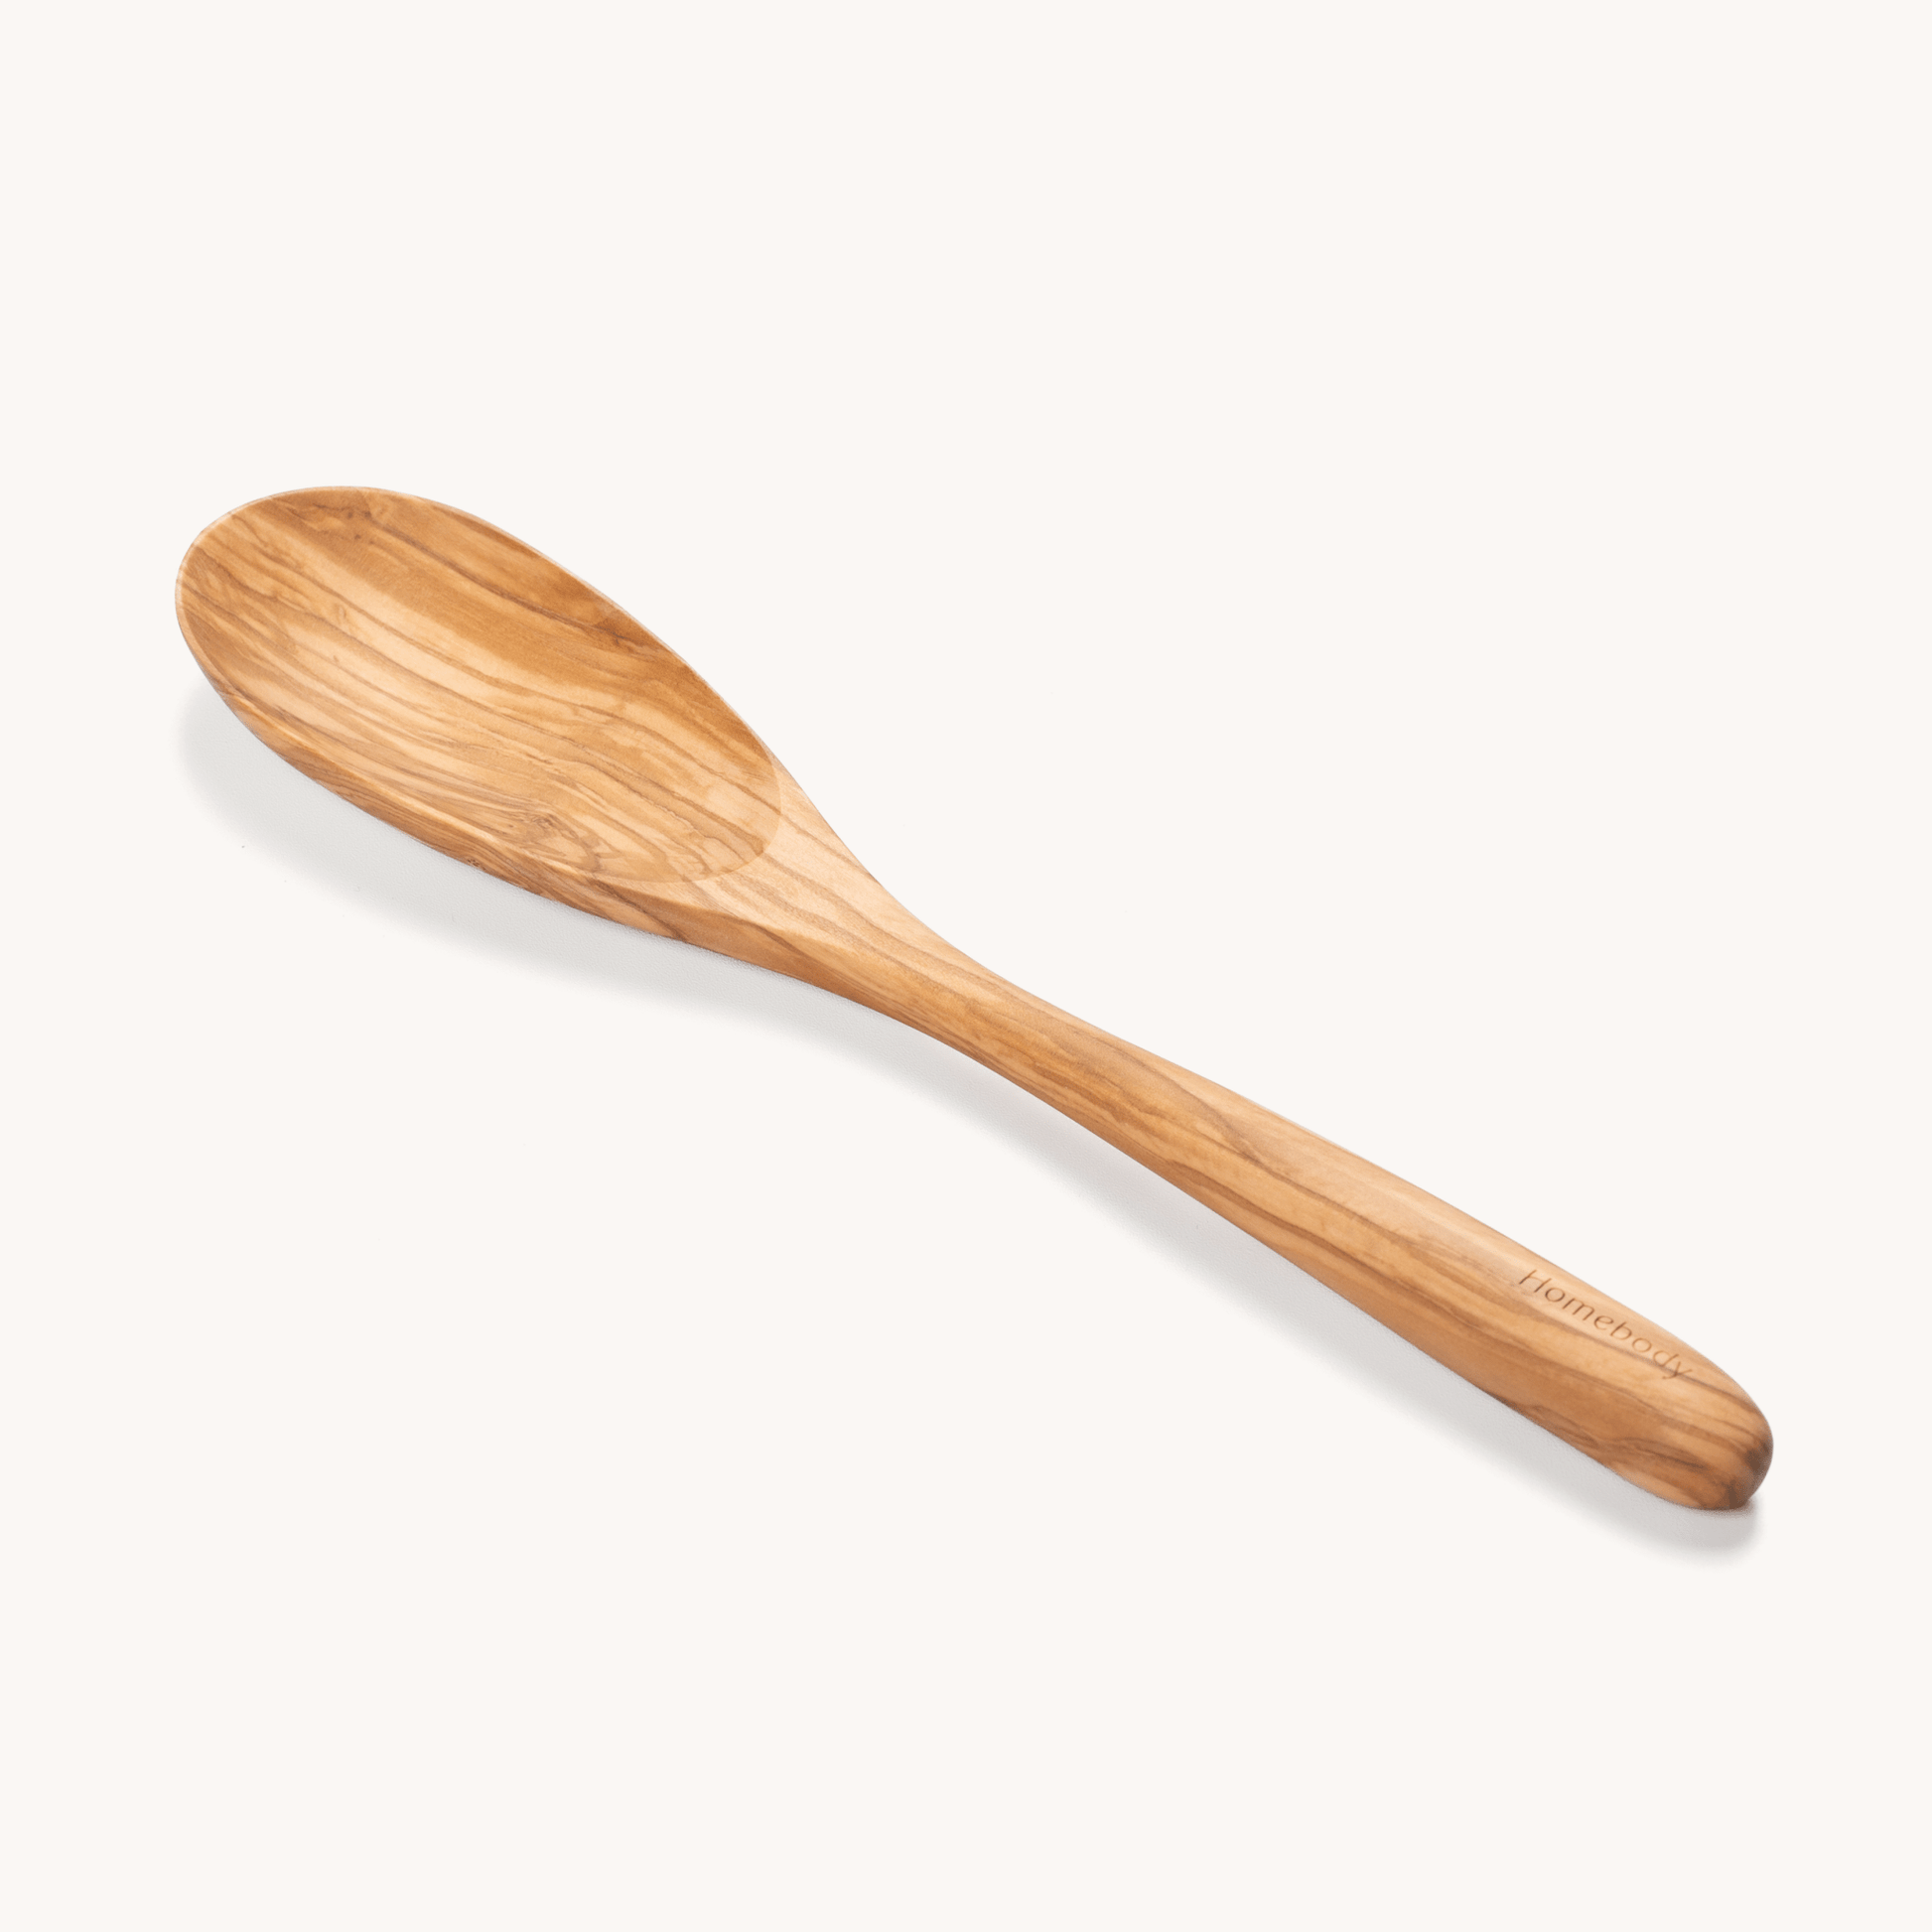 Olivewood Spoon - Homebody | Ceramic Non-stick cookware | No PFOA, PTFE